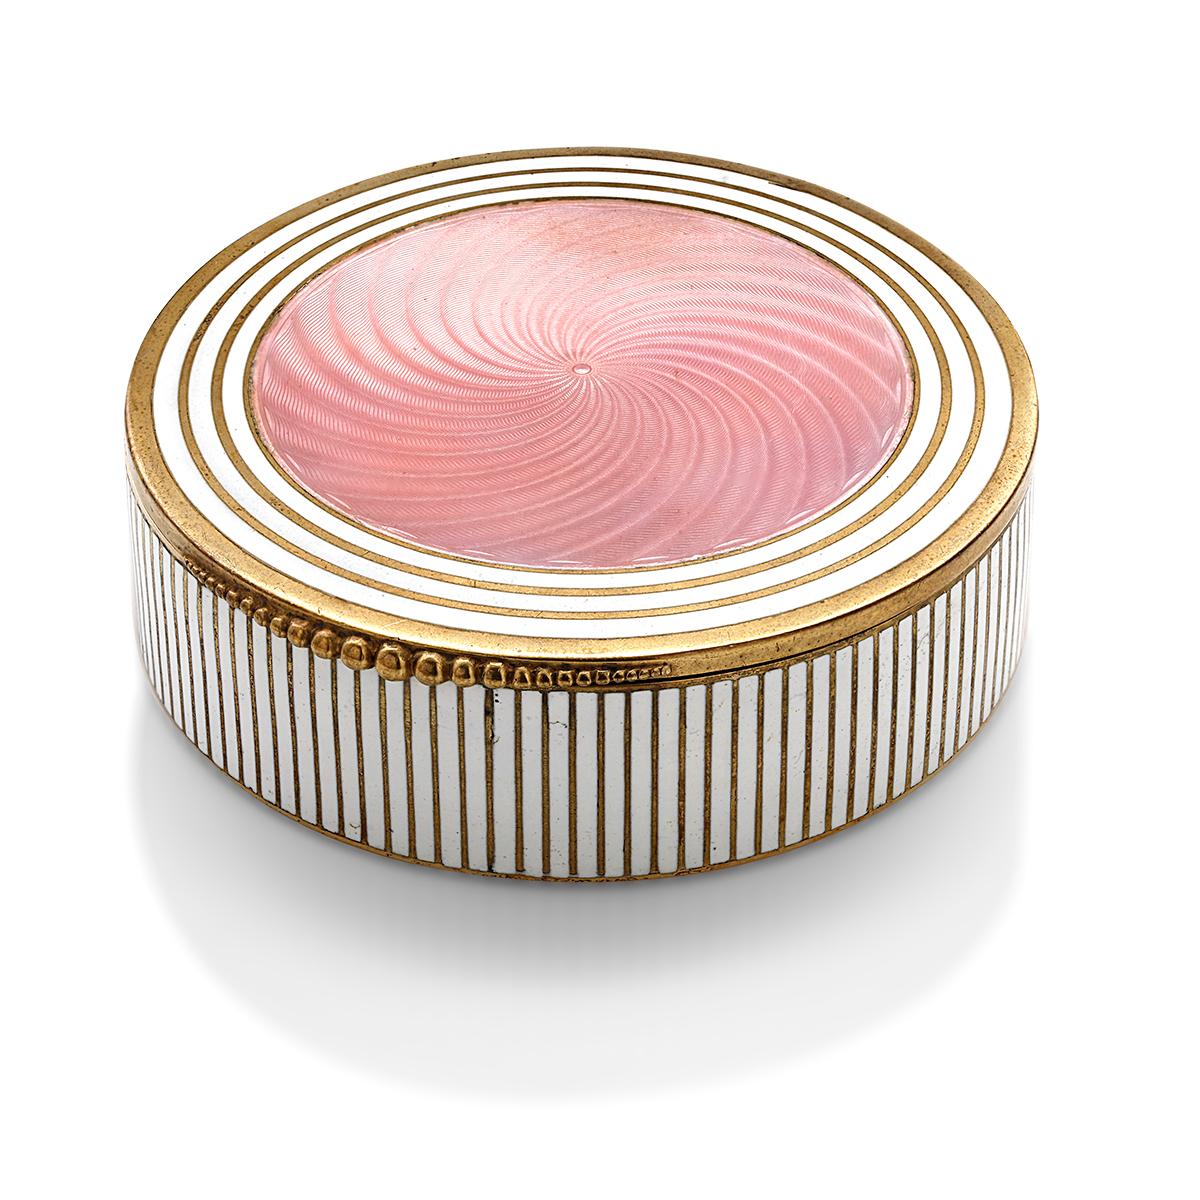 Vintage 20th century Art Deco silver circular pink and gold enamel powder box
Diameter: 3.25